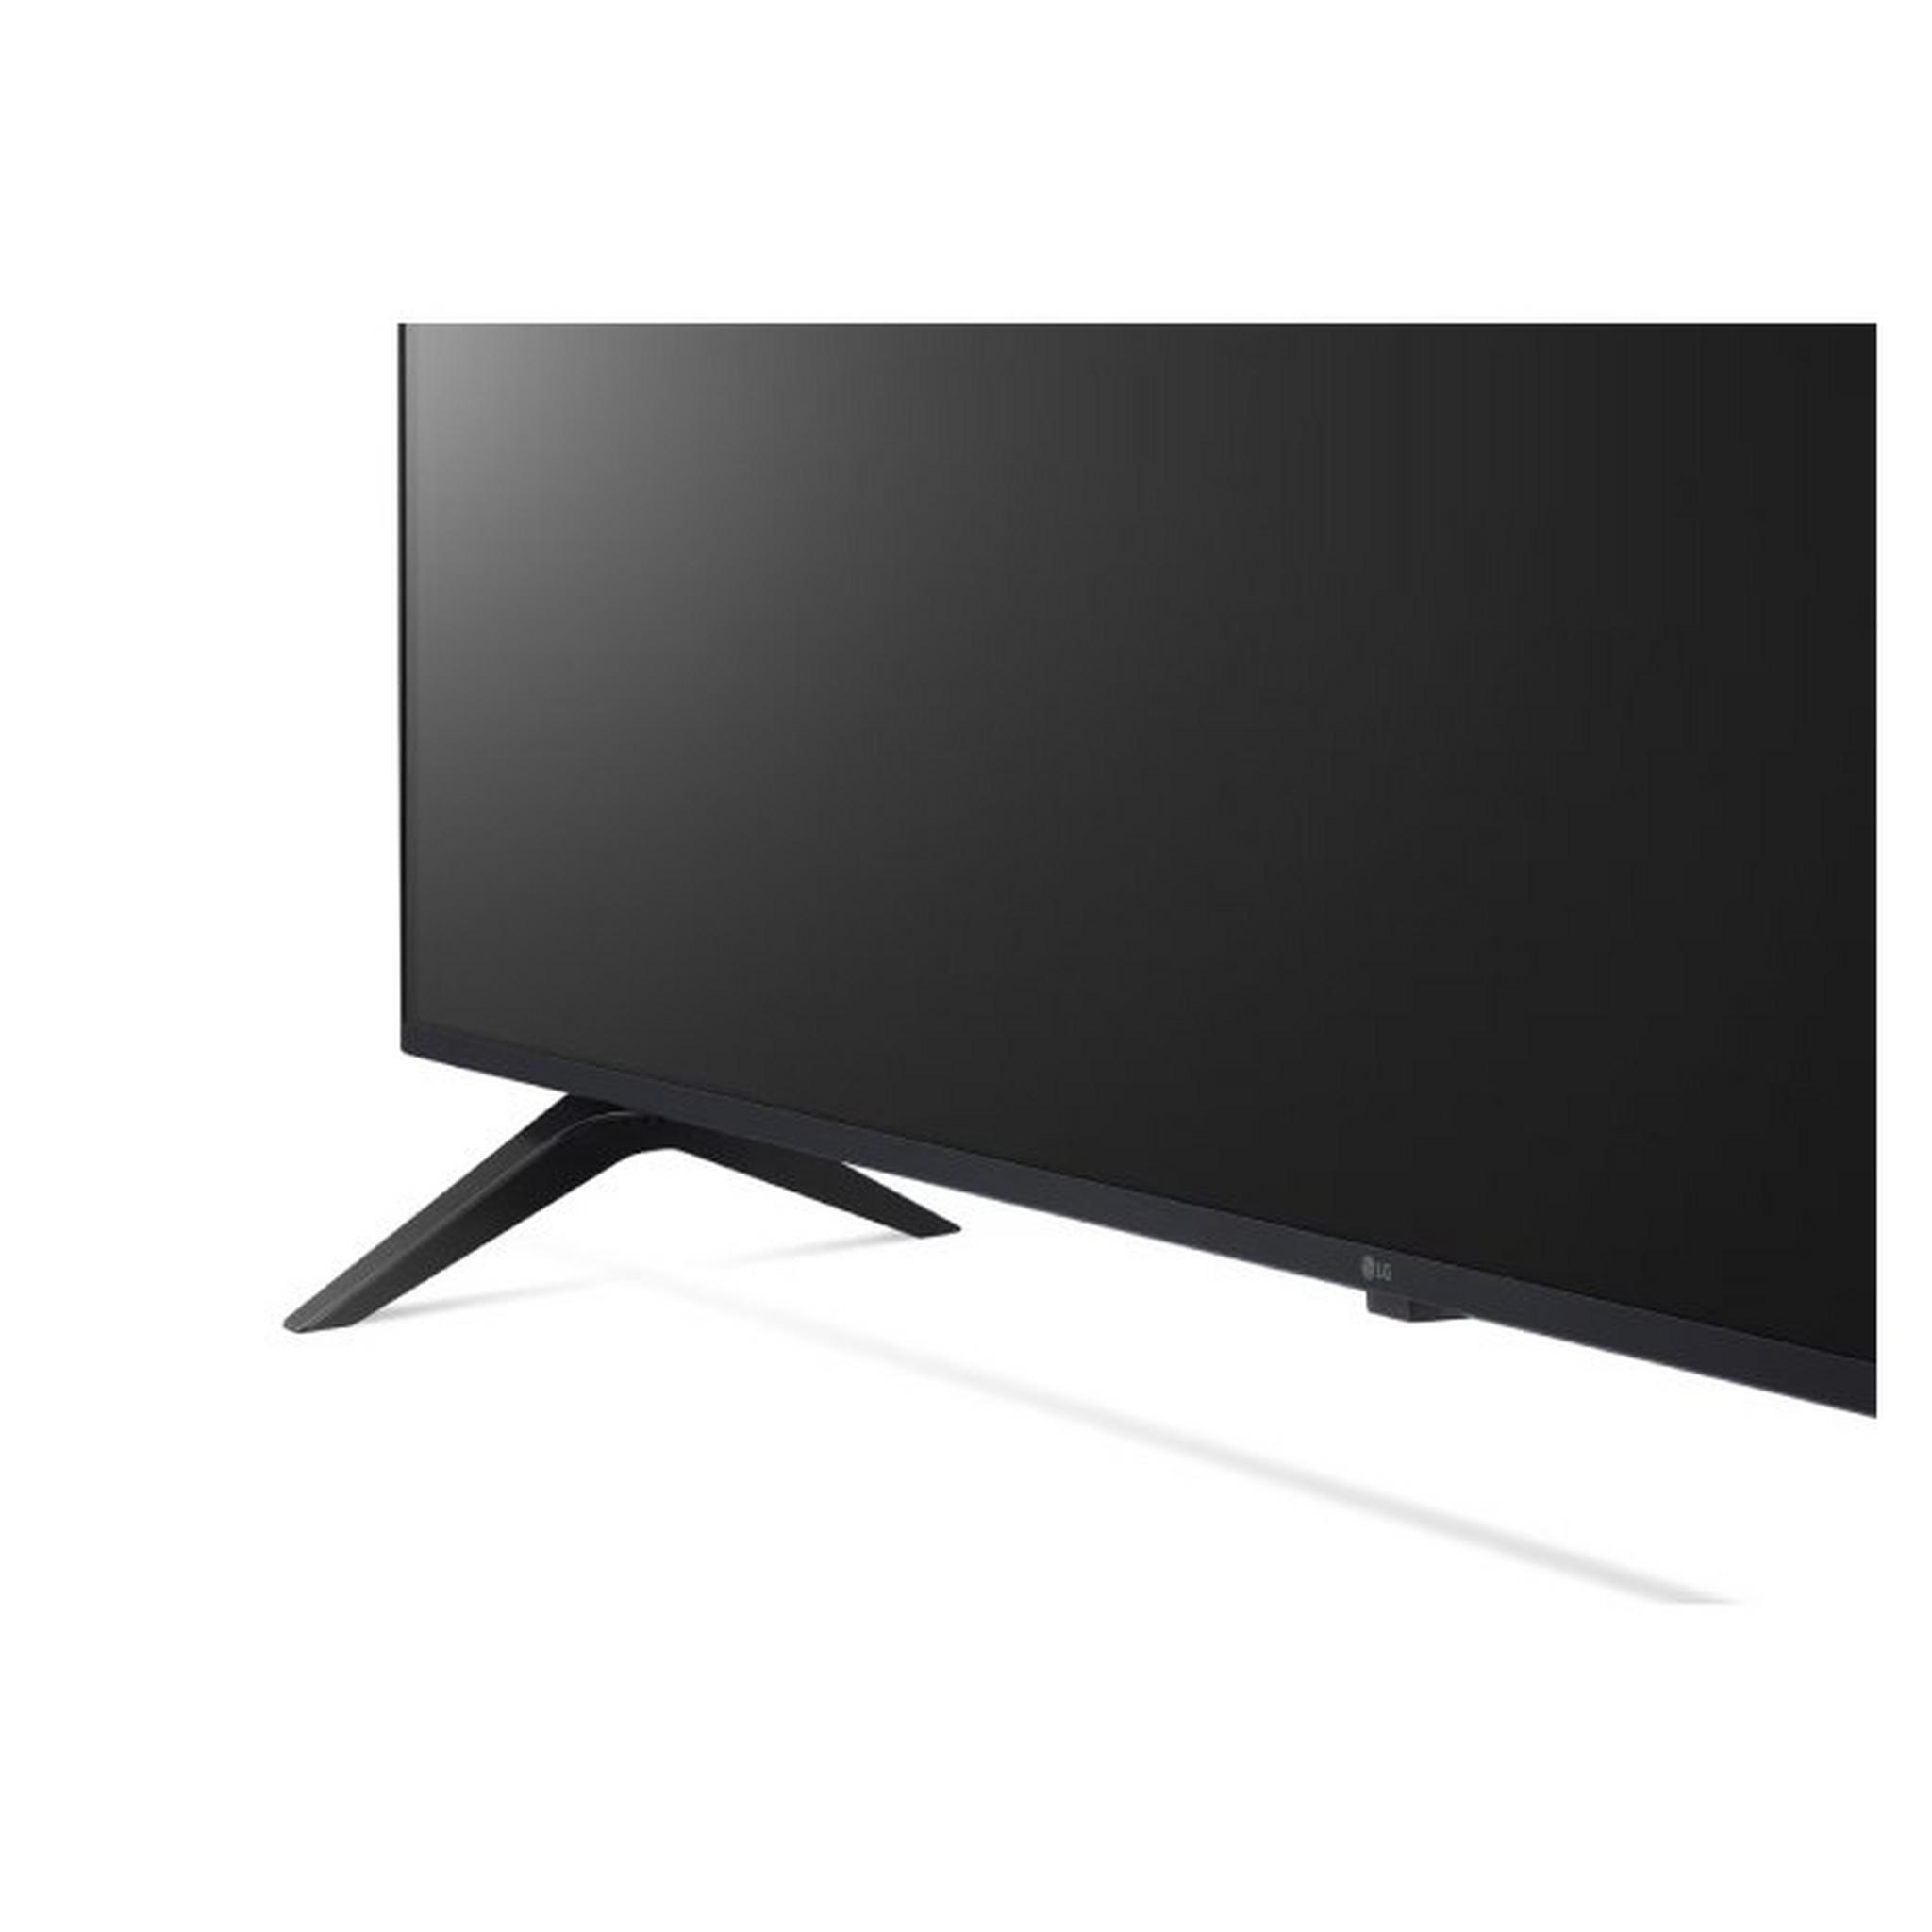 LG 55-inch Smart UHD LED TV, 55UR80006LJ – Black